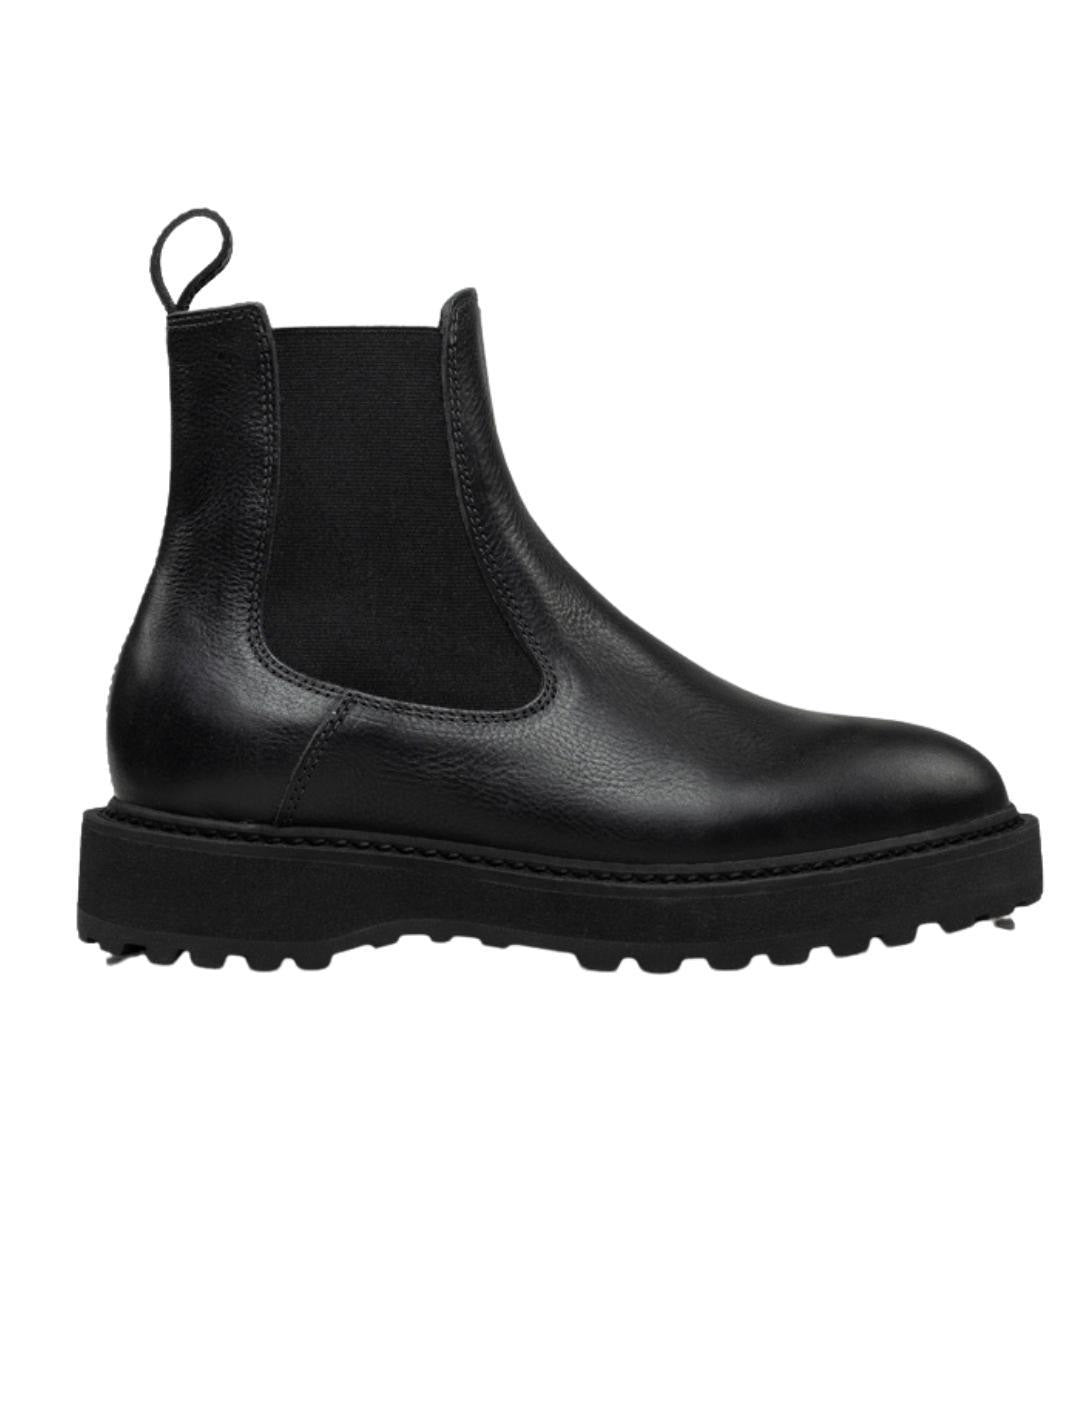 Diemme Shoes Boots | Alberone Black Leather